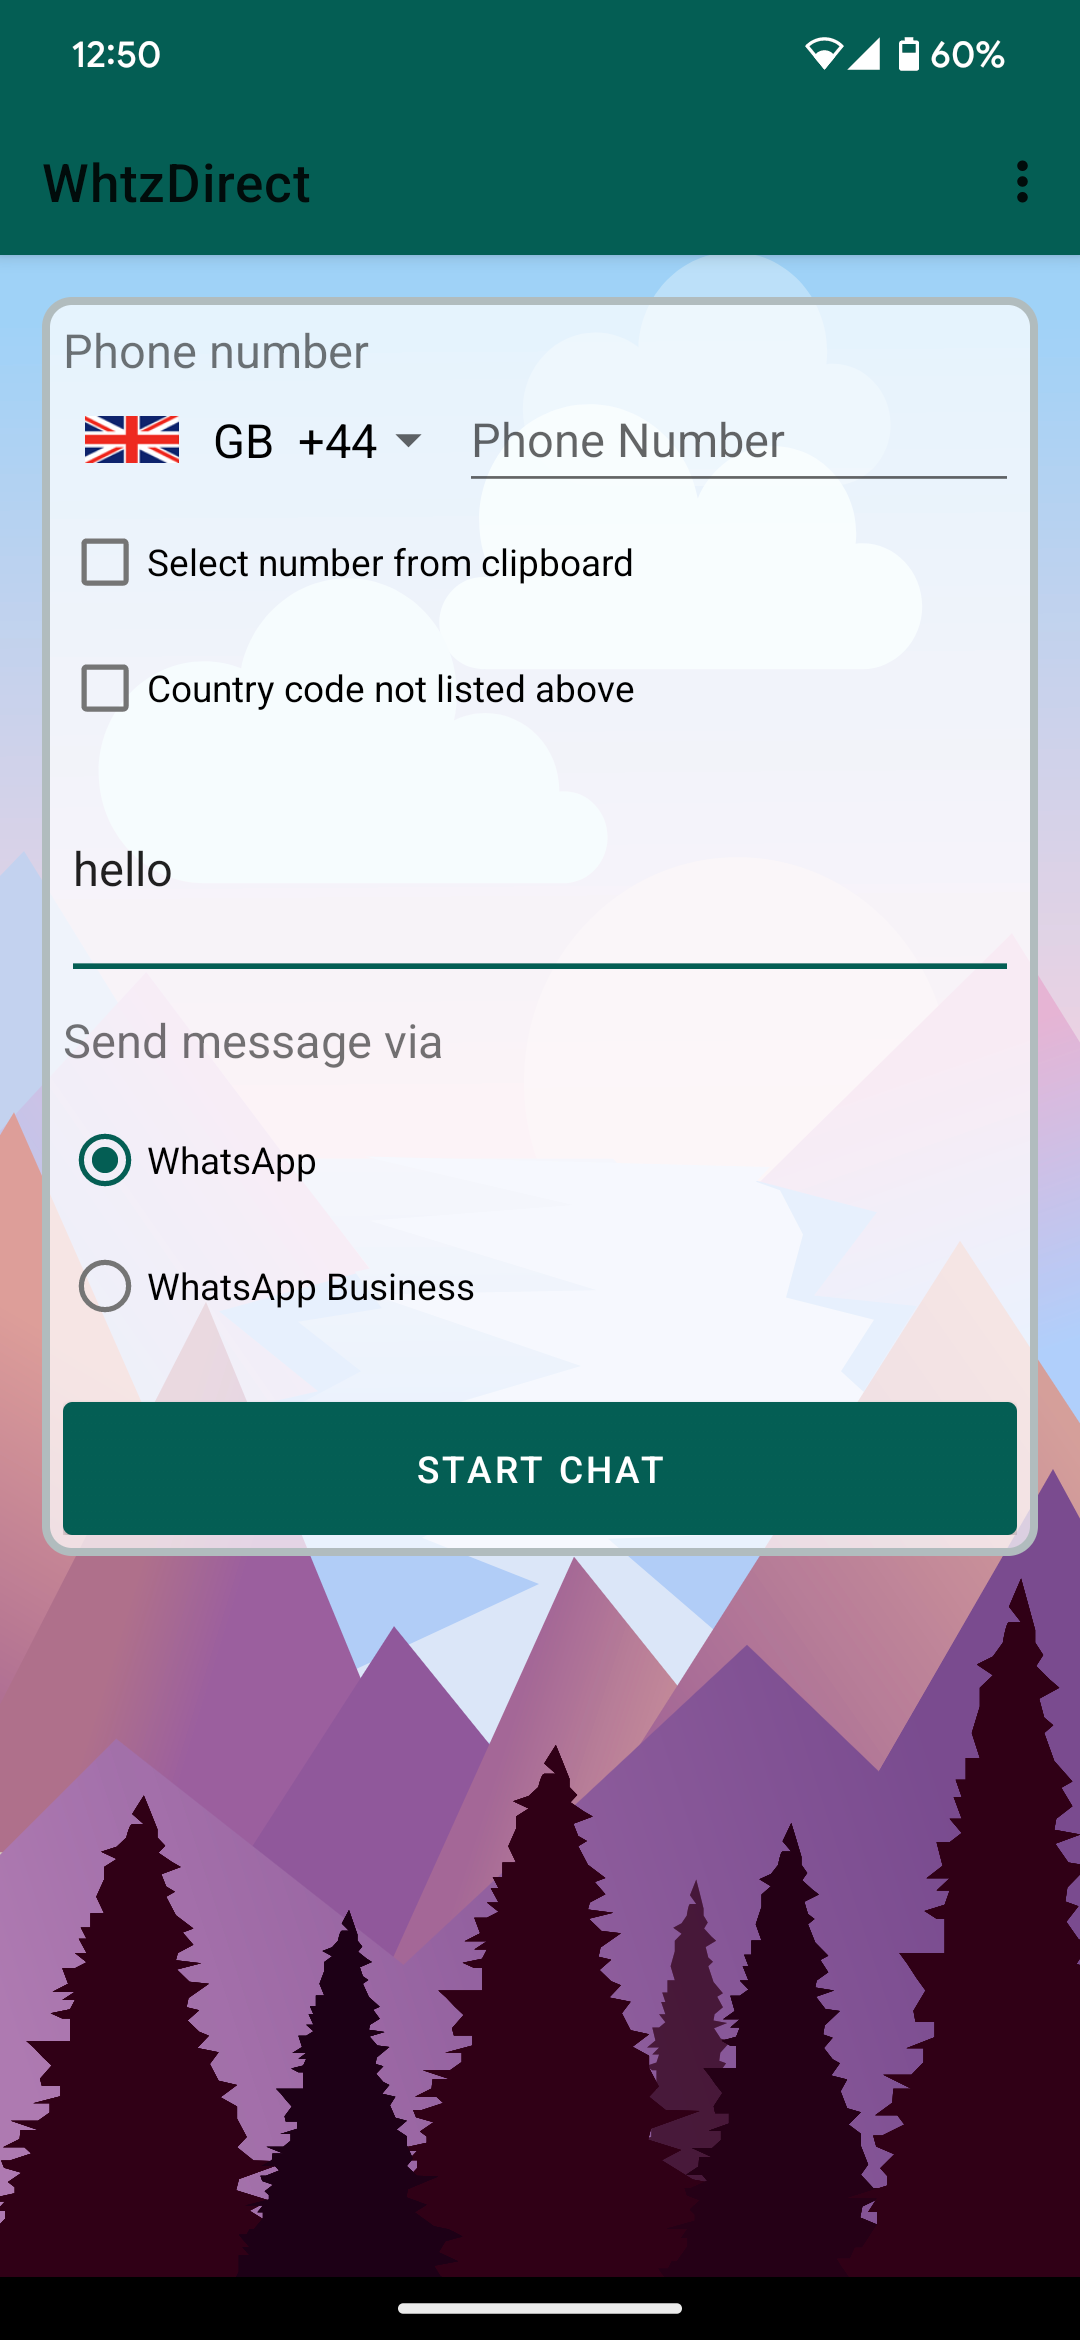 screenshot of whtzdirect app window